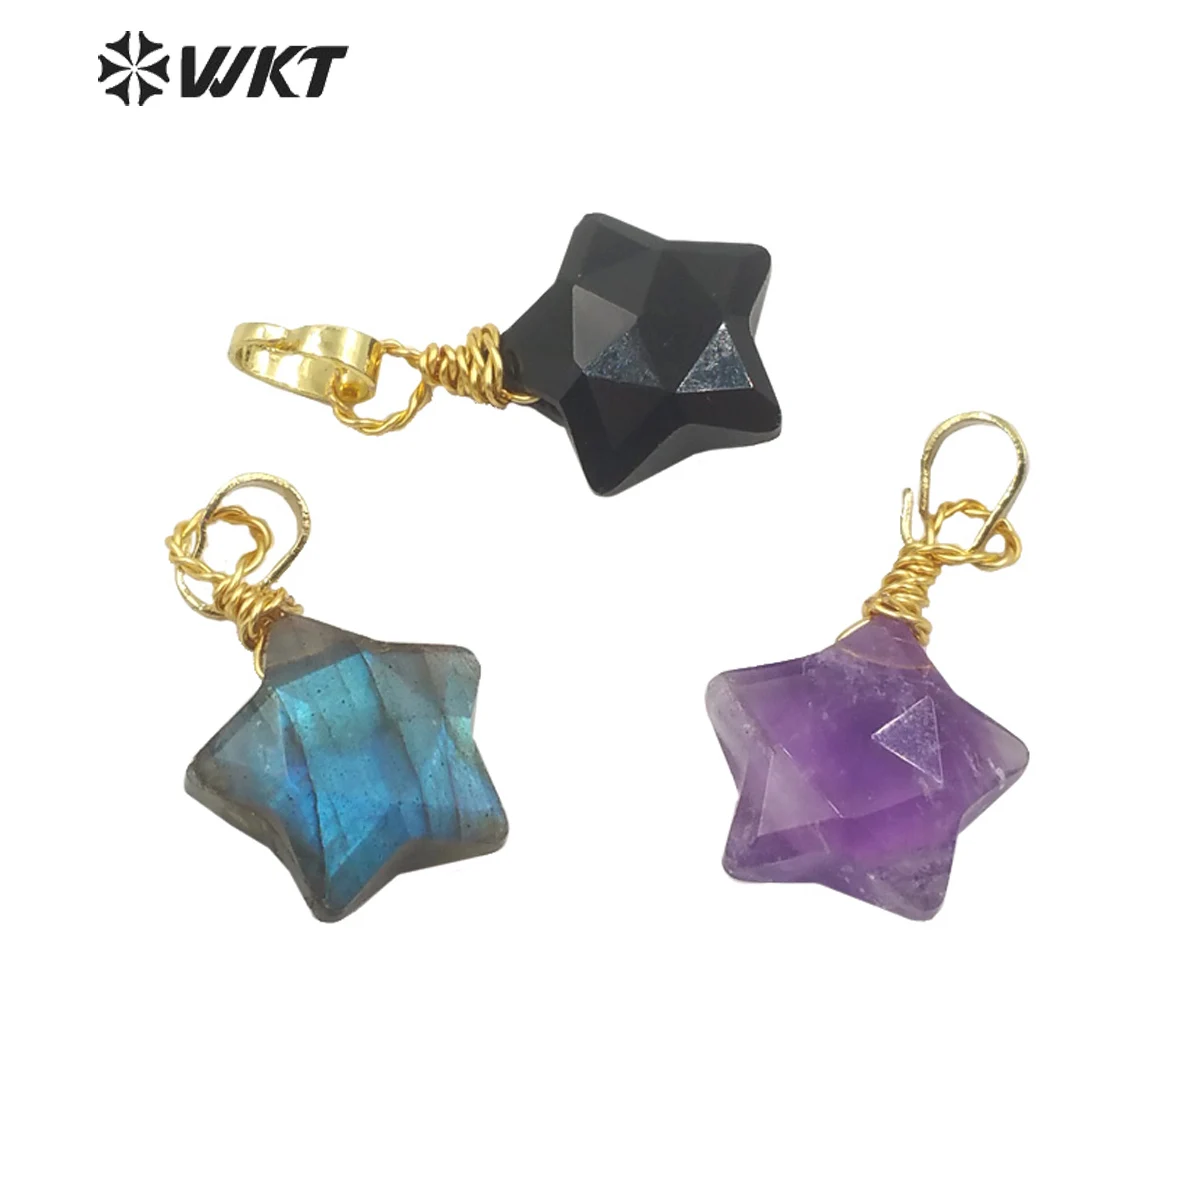 

WT-P1704 WKT New design Natural gem stone tiny Star pendant lady handmade wire wrapped Labradorite star stone charm pendant